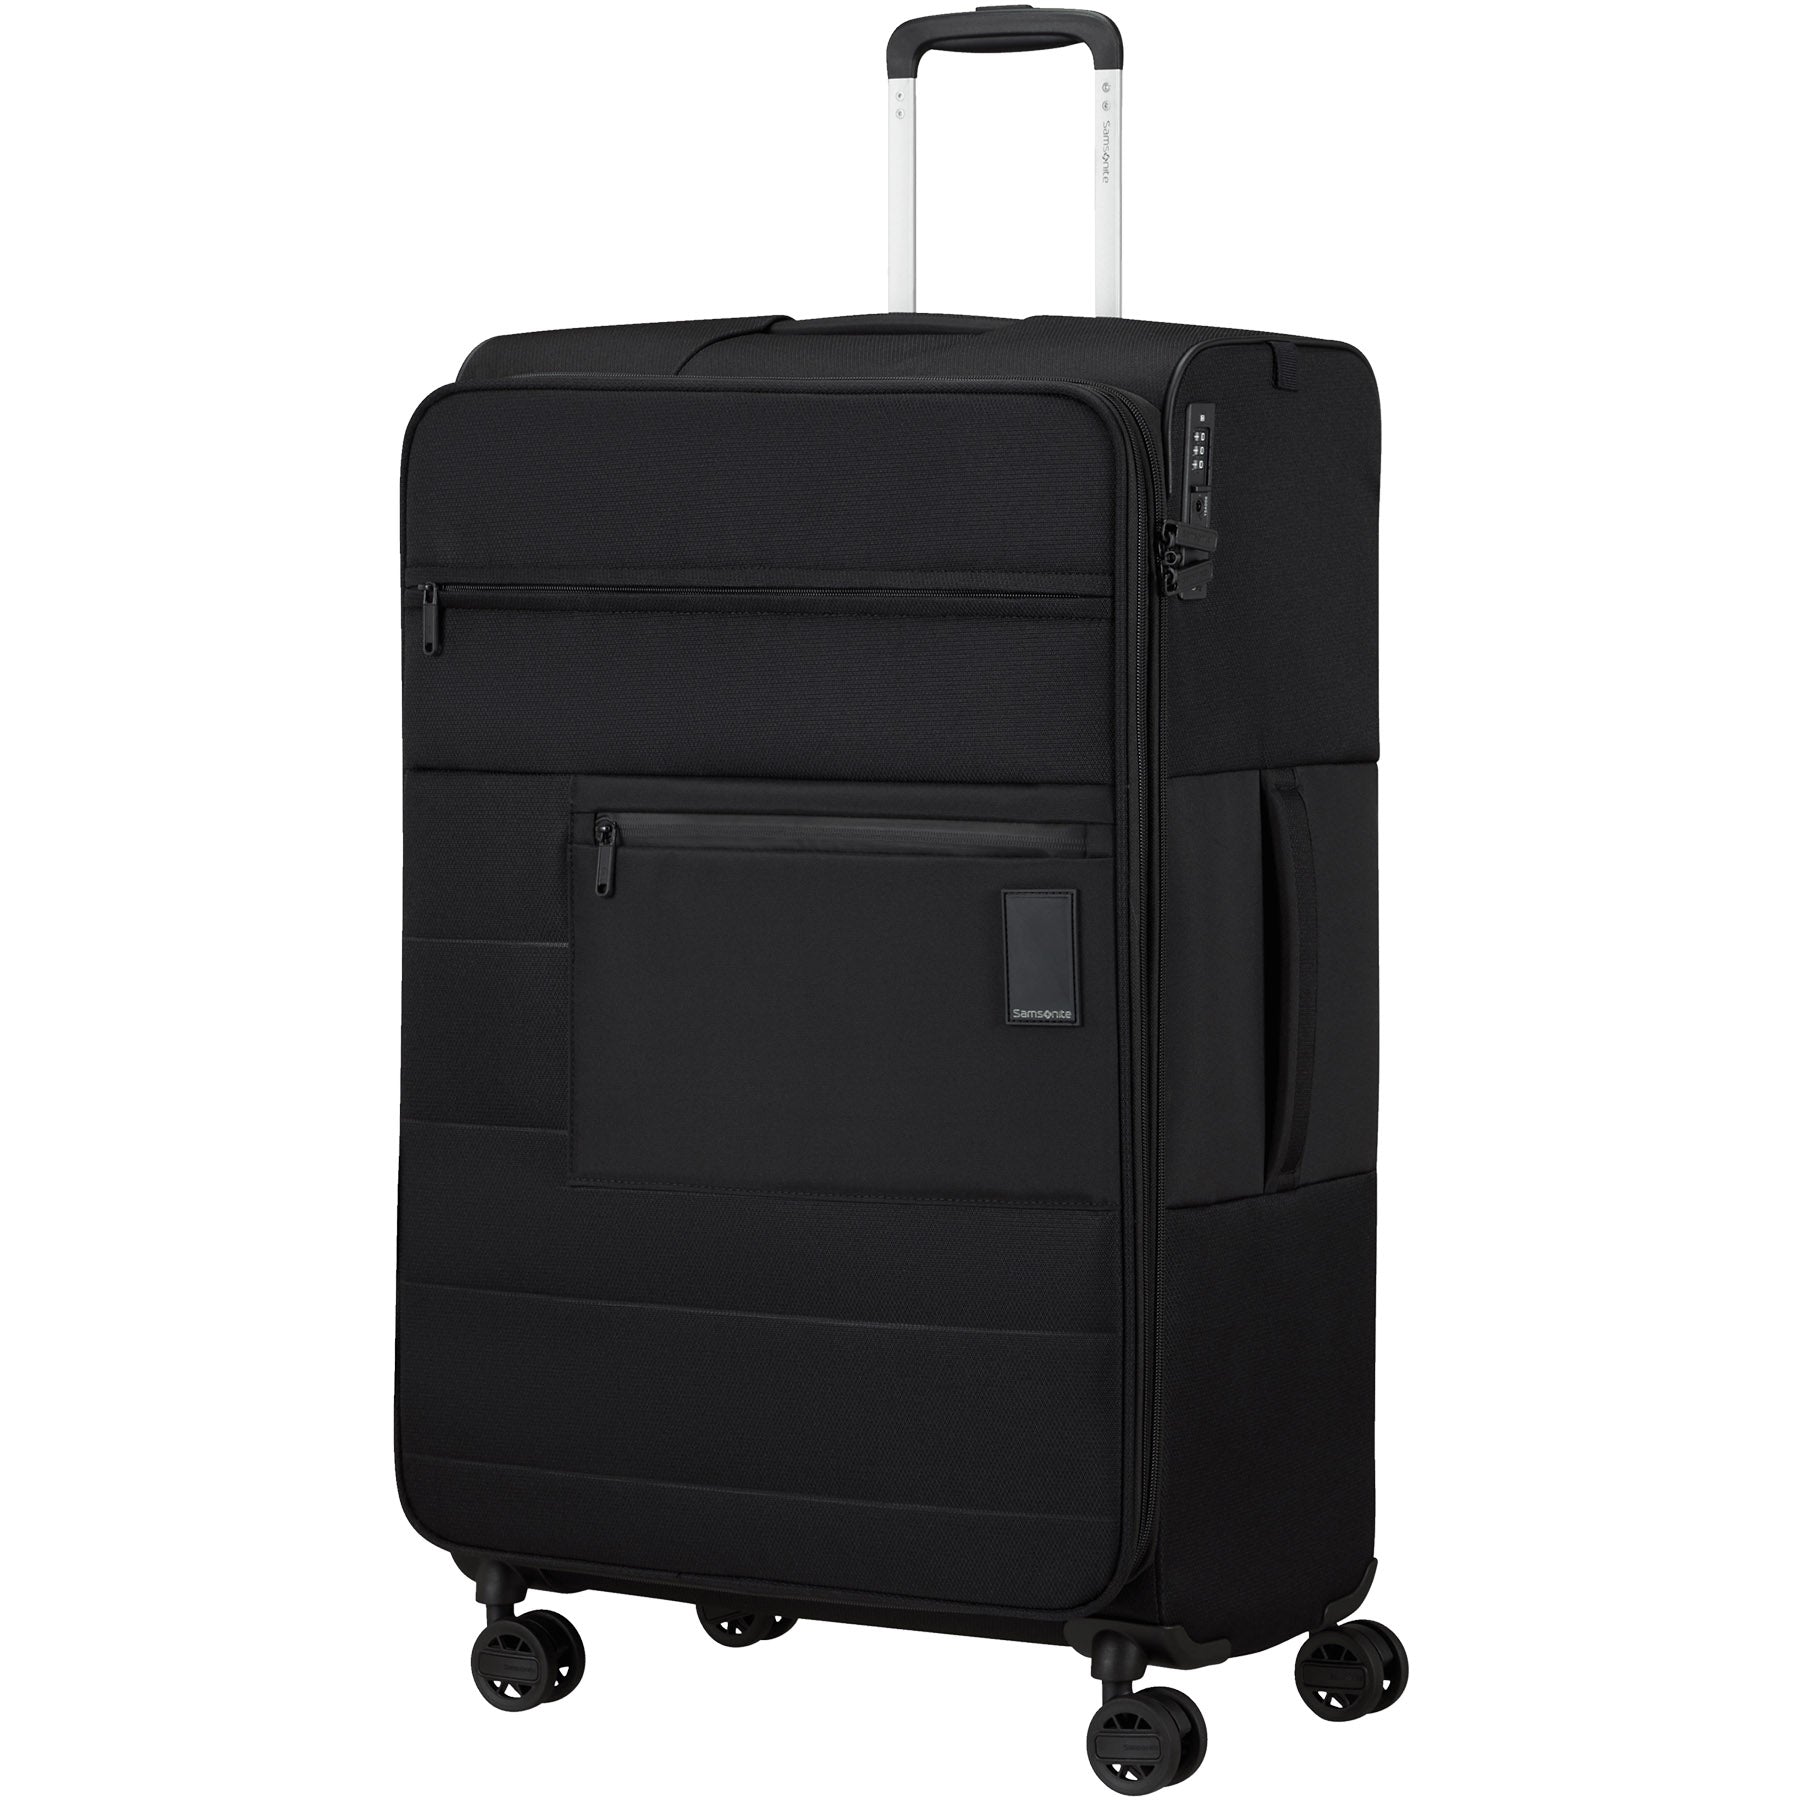 Samsonite Vacay Spinner Large Expandable Luggage - Black